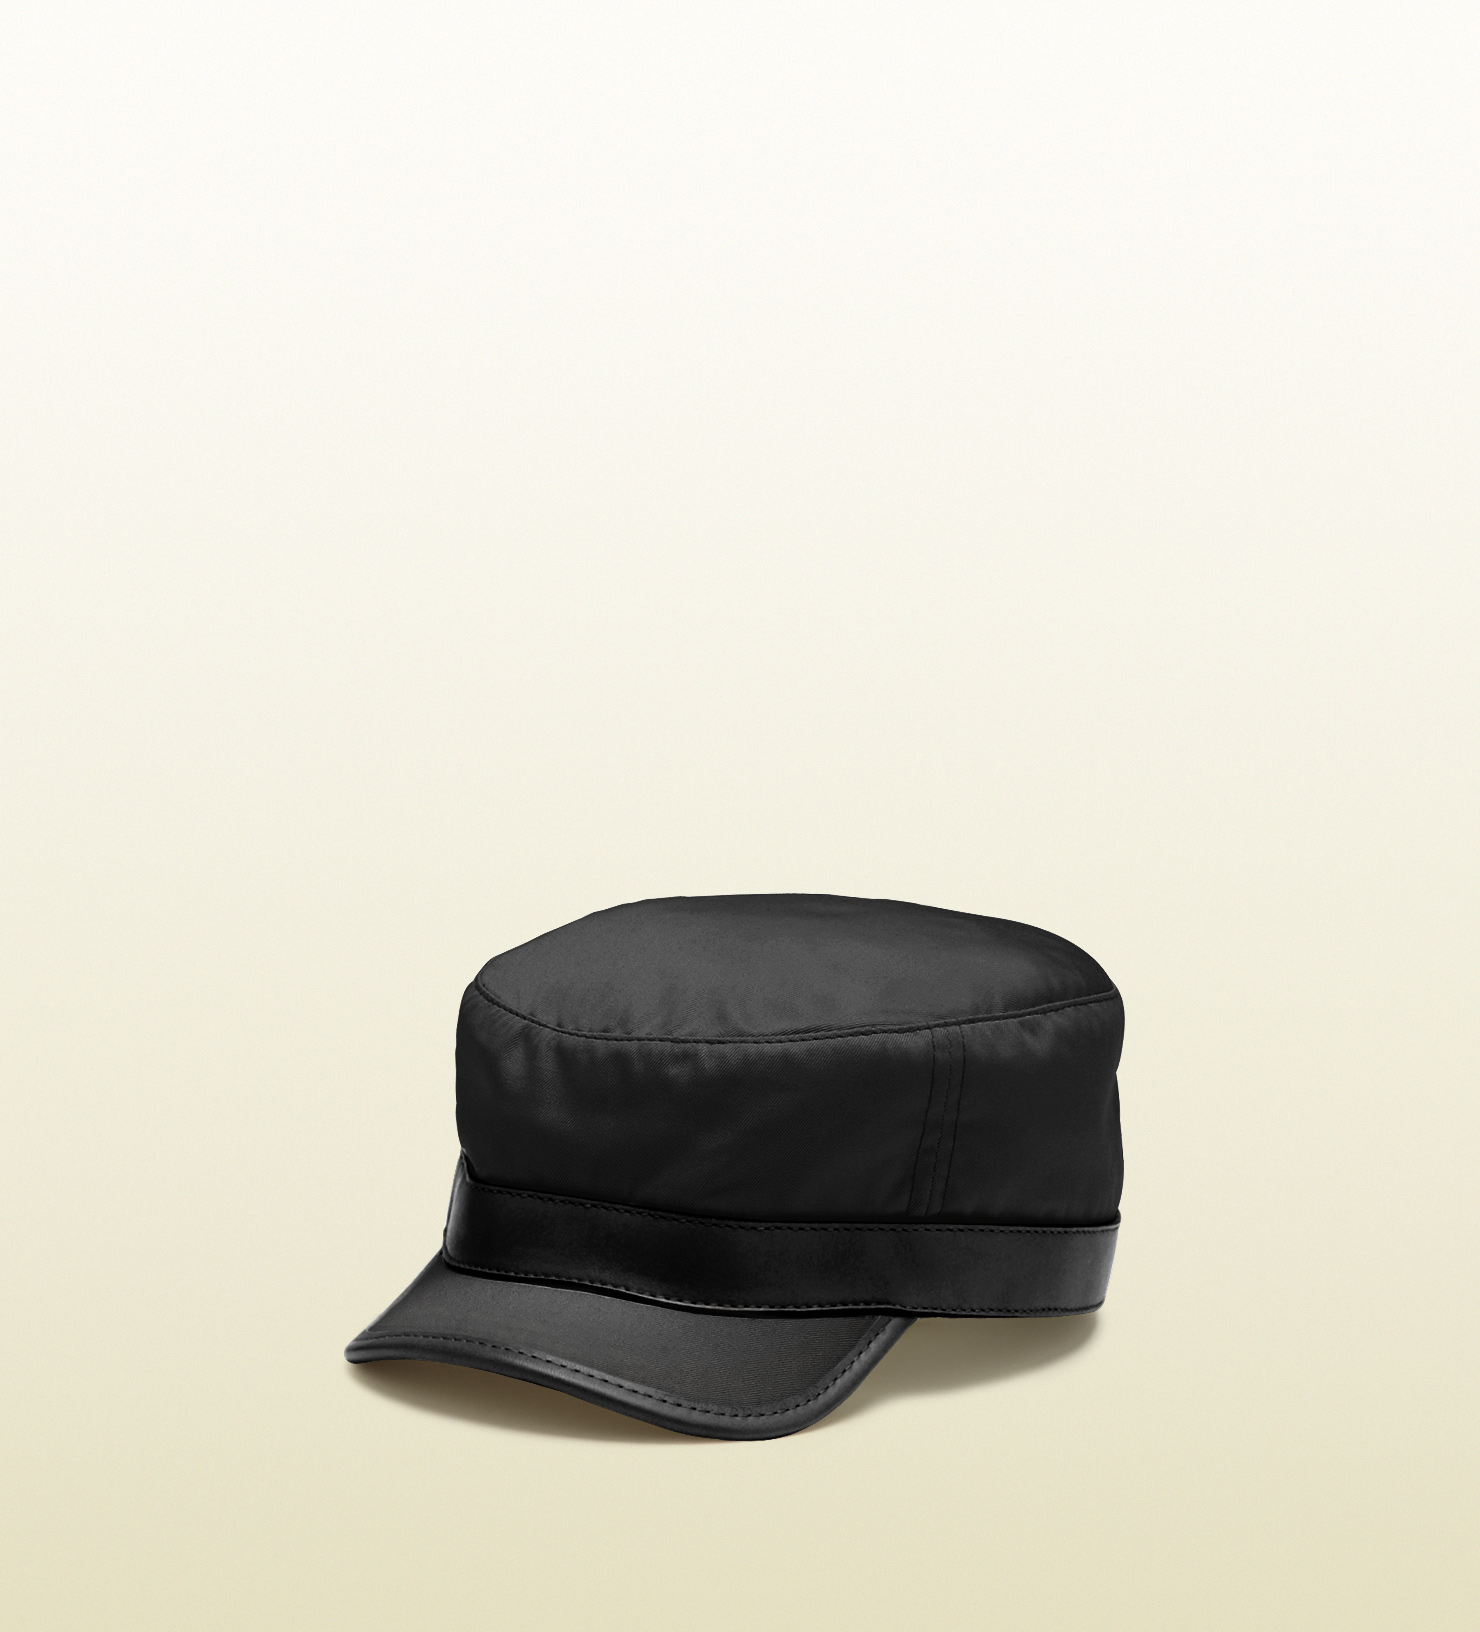 Gucci Black Cotton Army Hat for Men